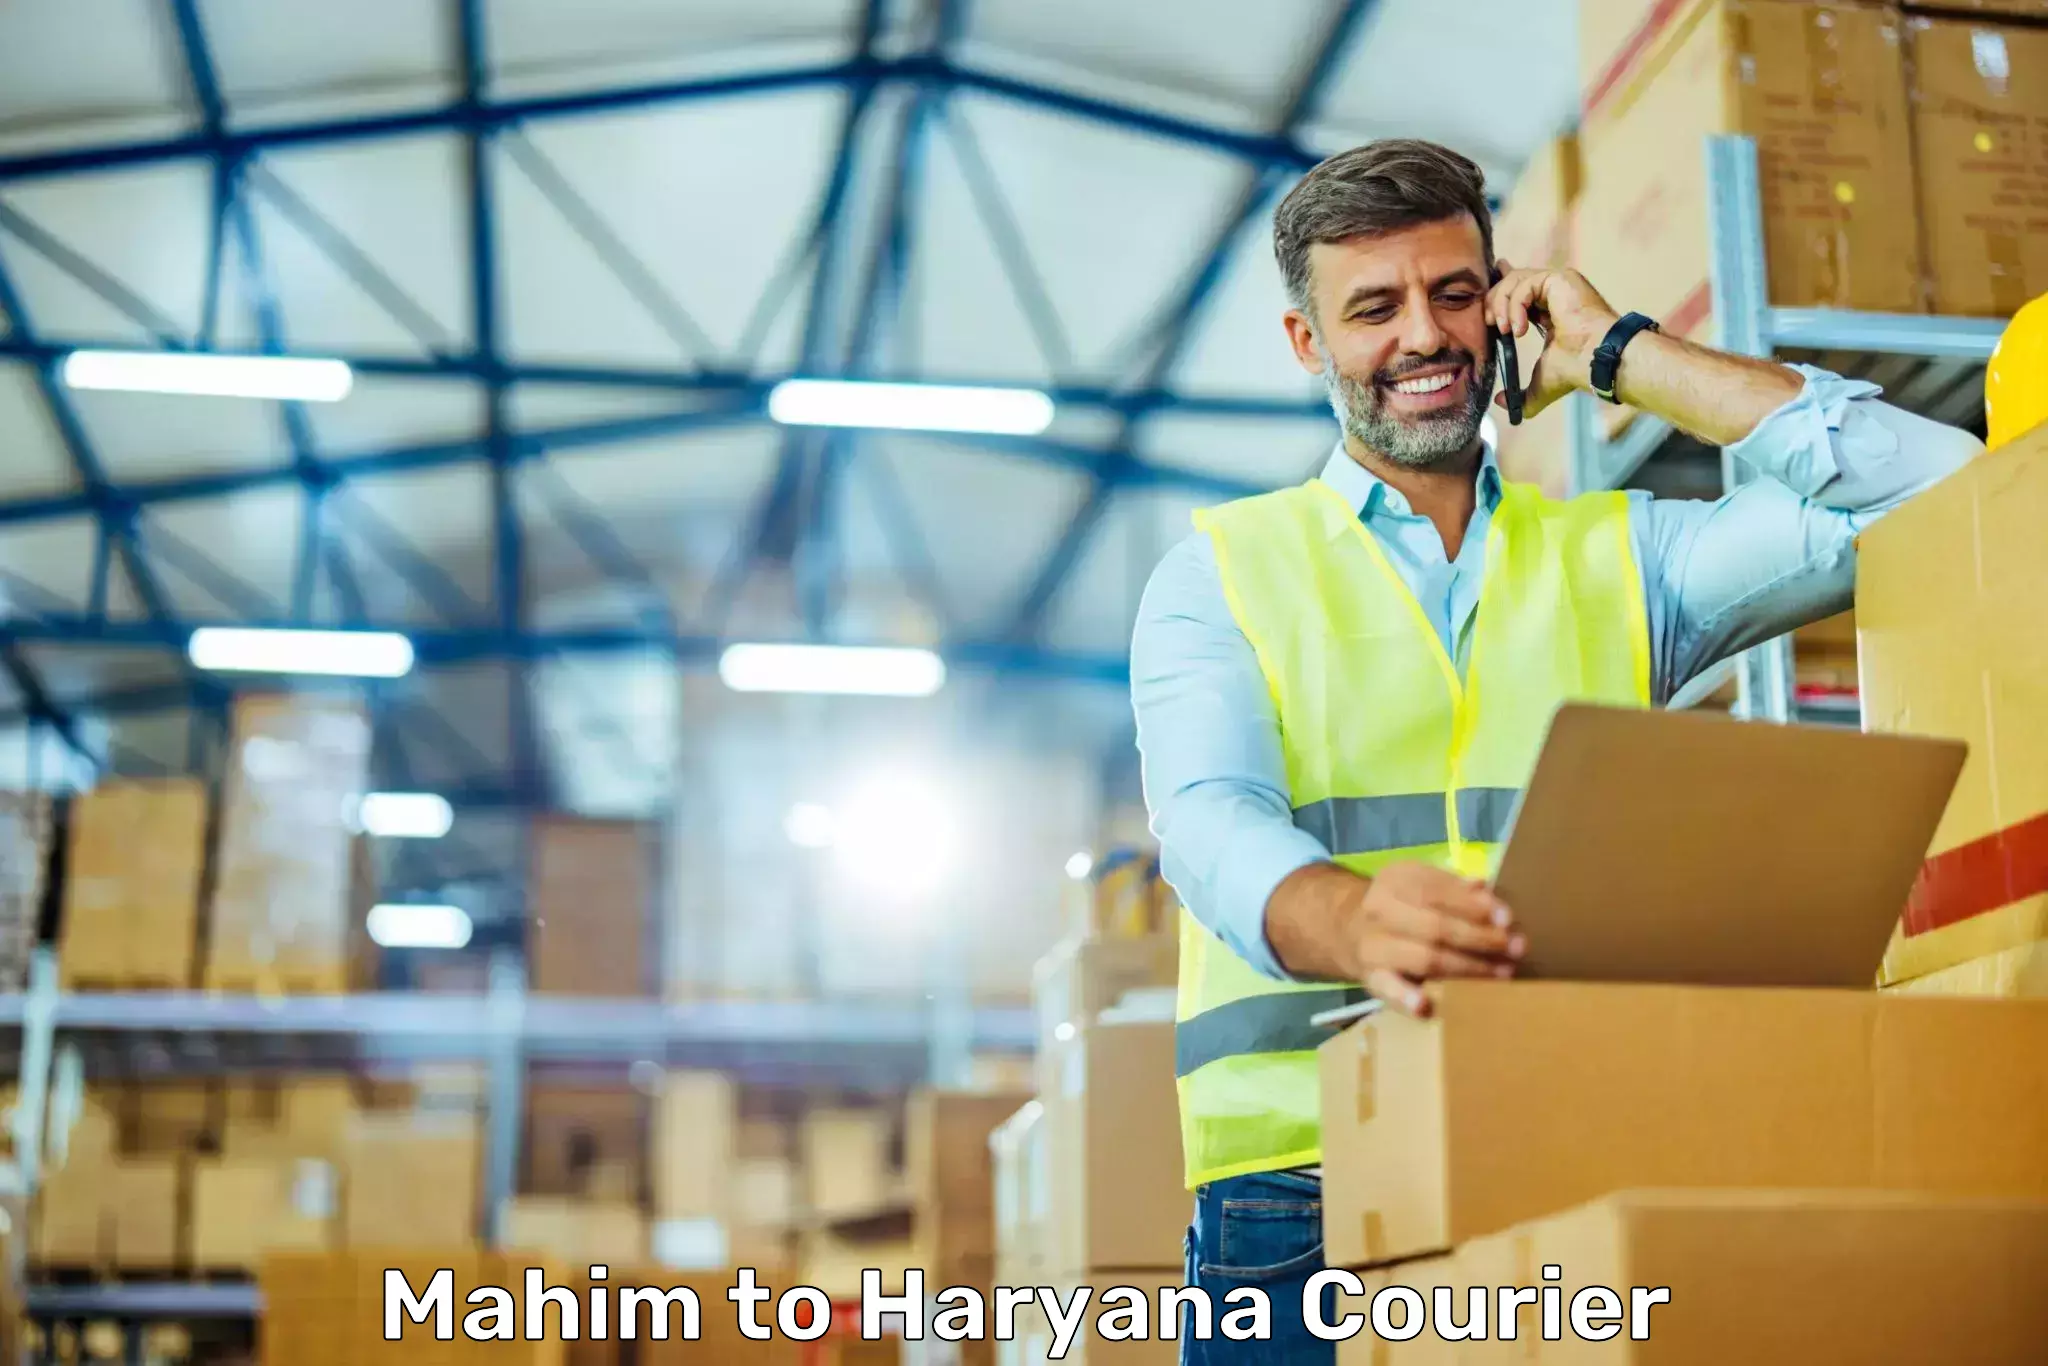 User-friendly delivery service Mahim to Charkhari